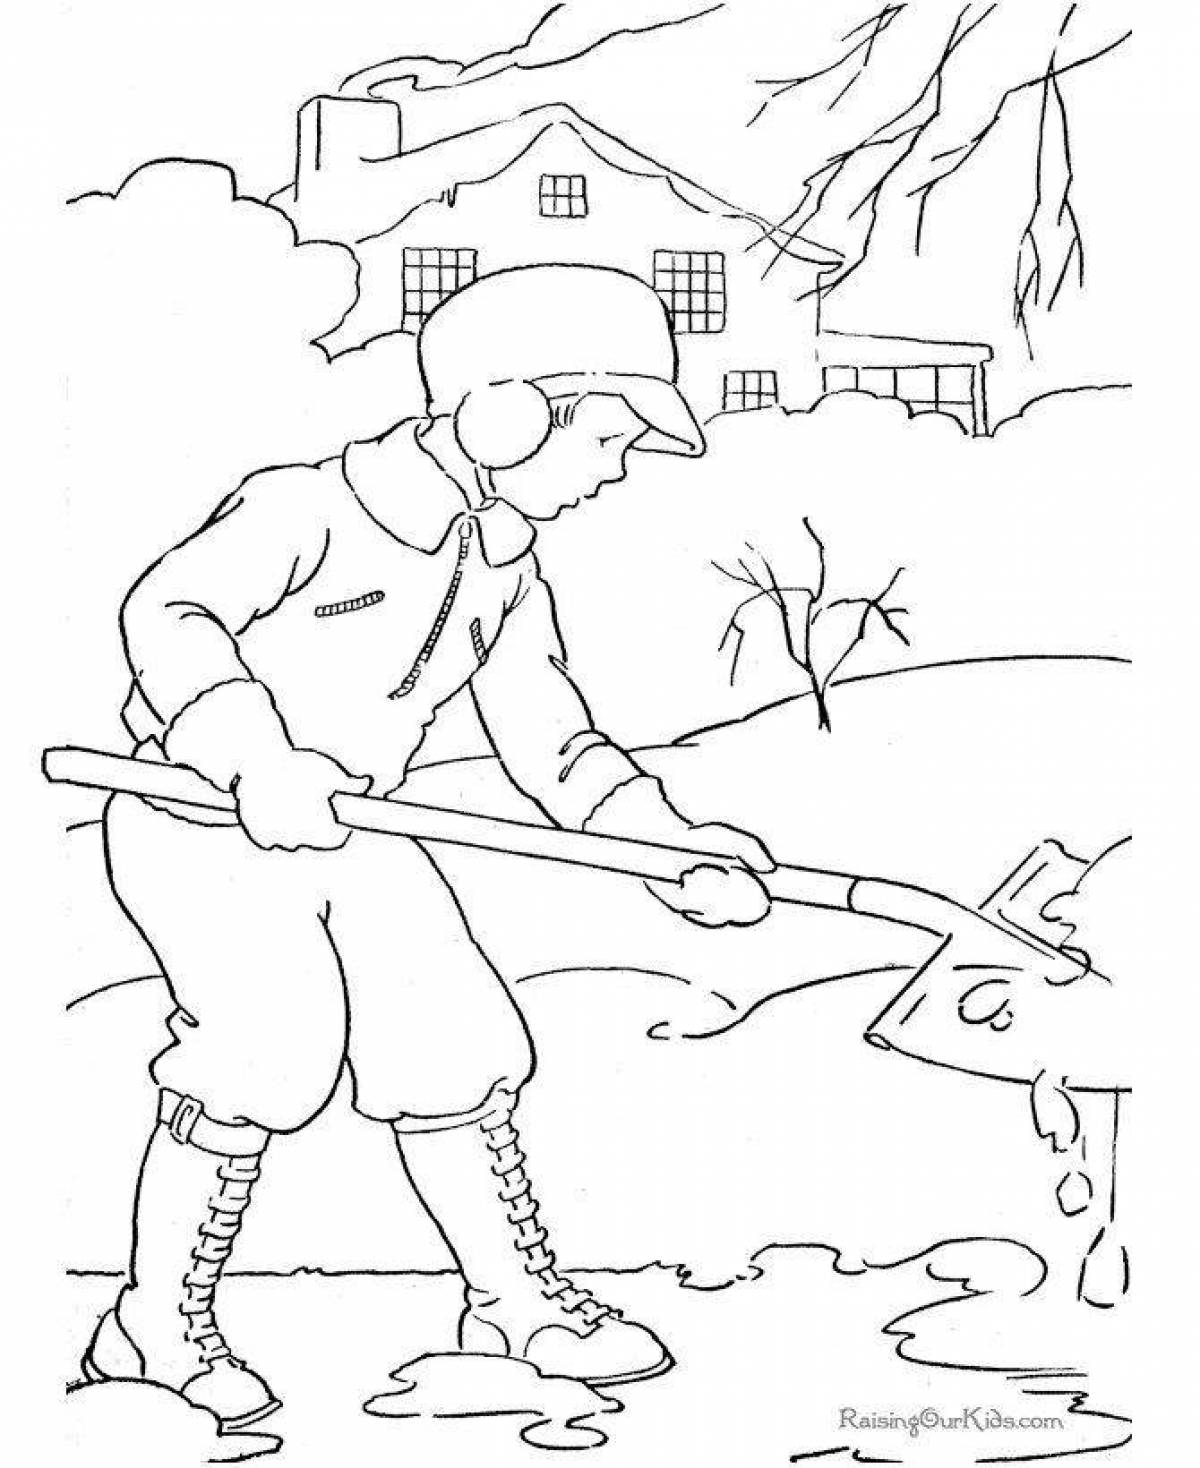 Human labor in winter #6